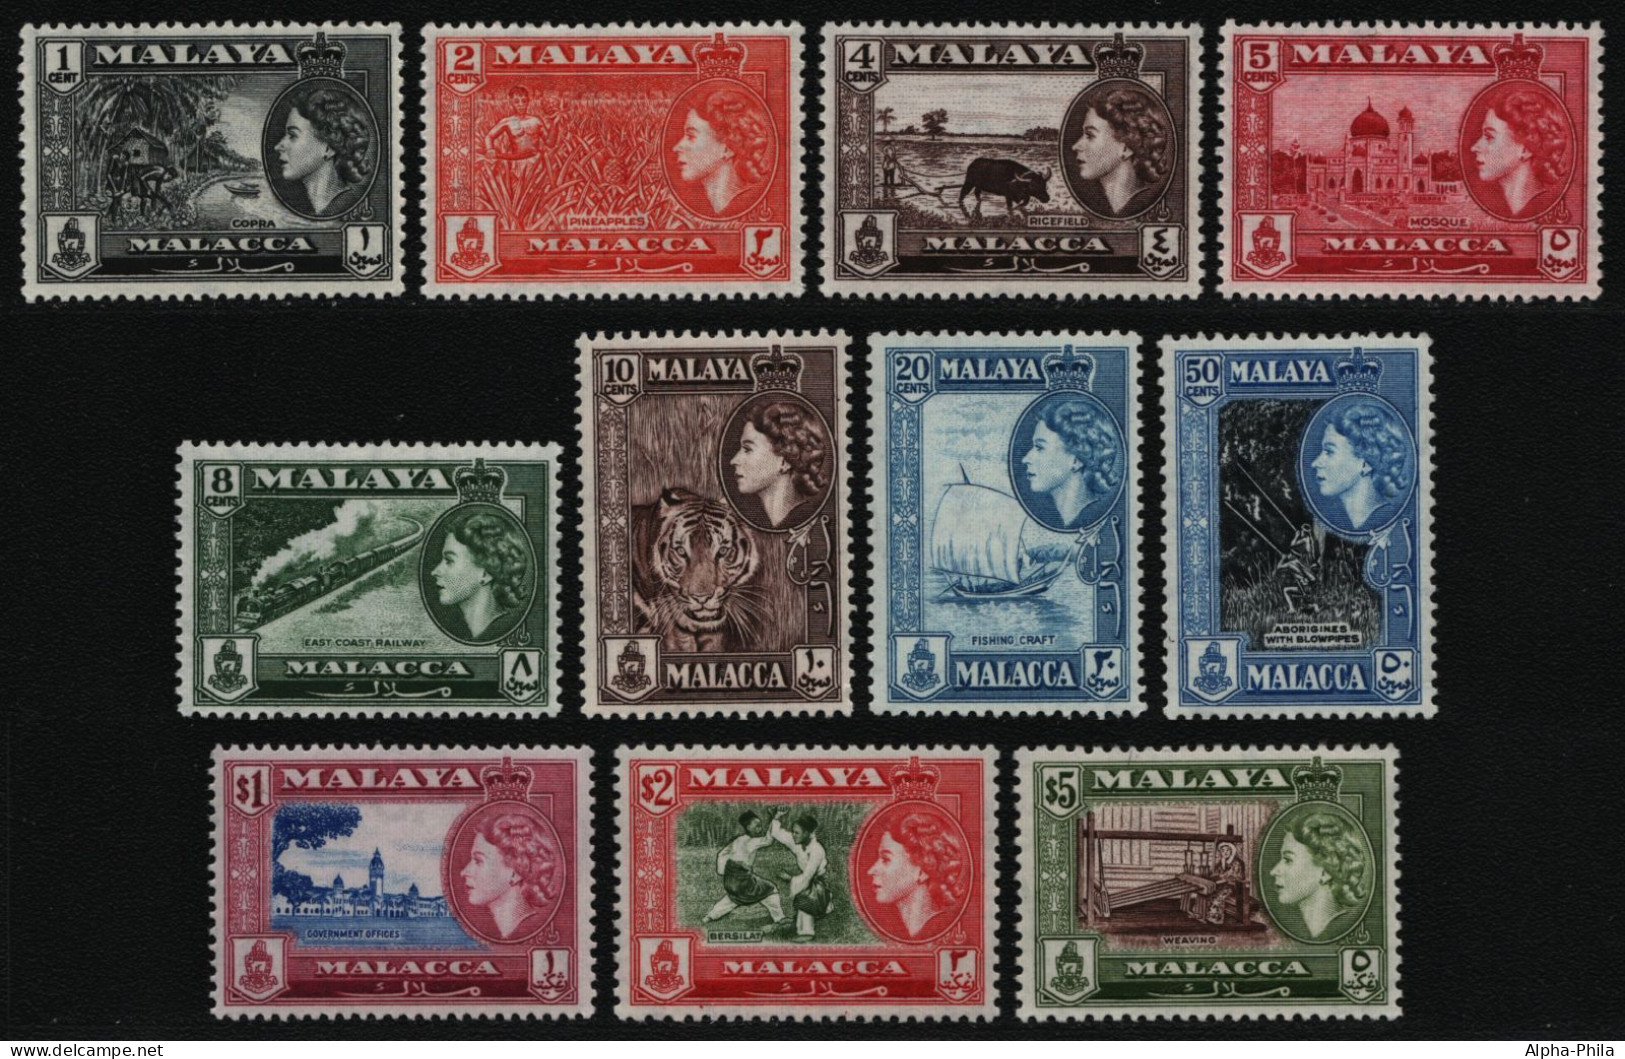 Malaya - Malacca 1957 - Mi-Nr. 44-54 ** - MNH - Freimarken / Definitives - Malacca